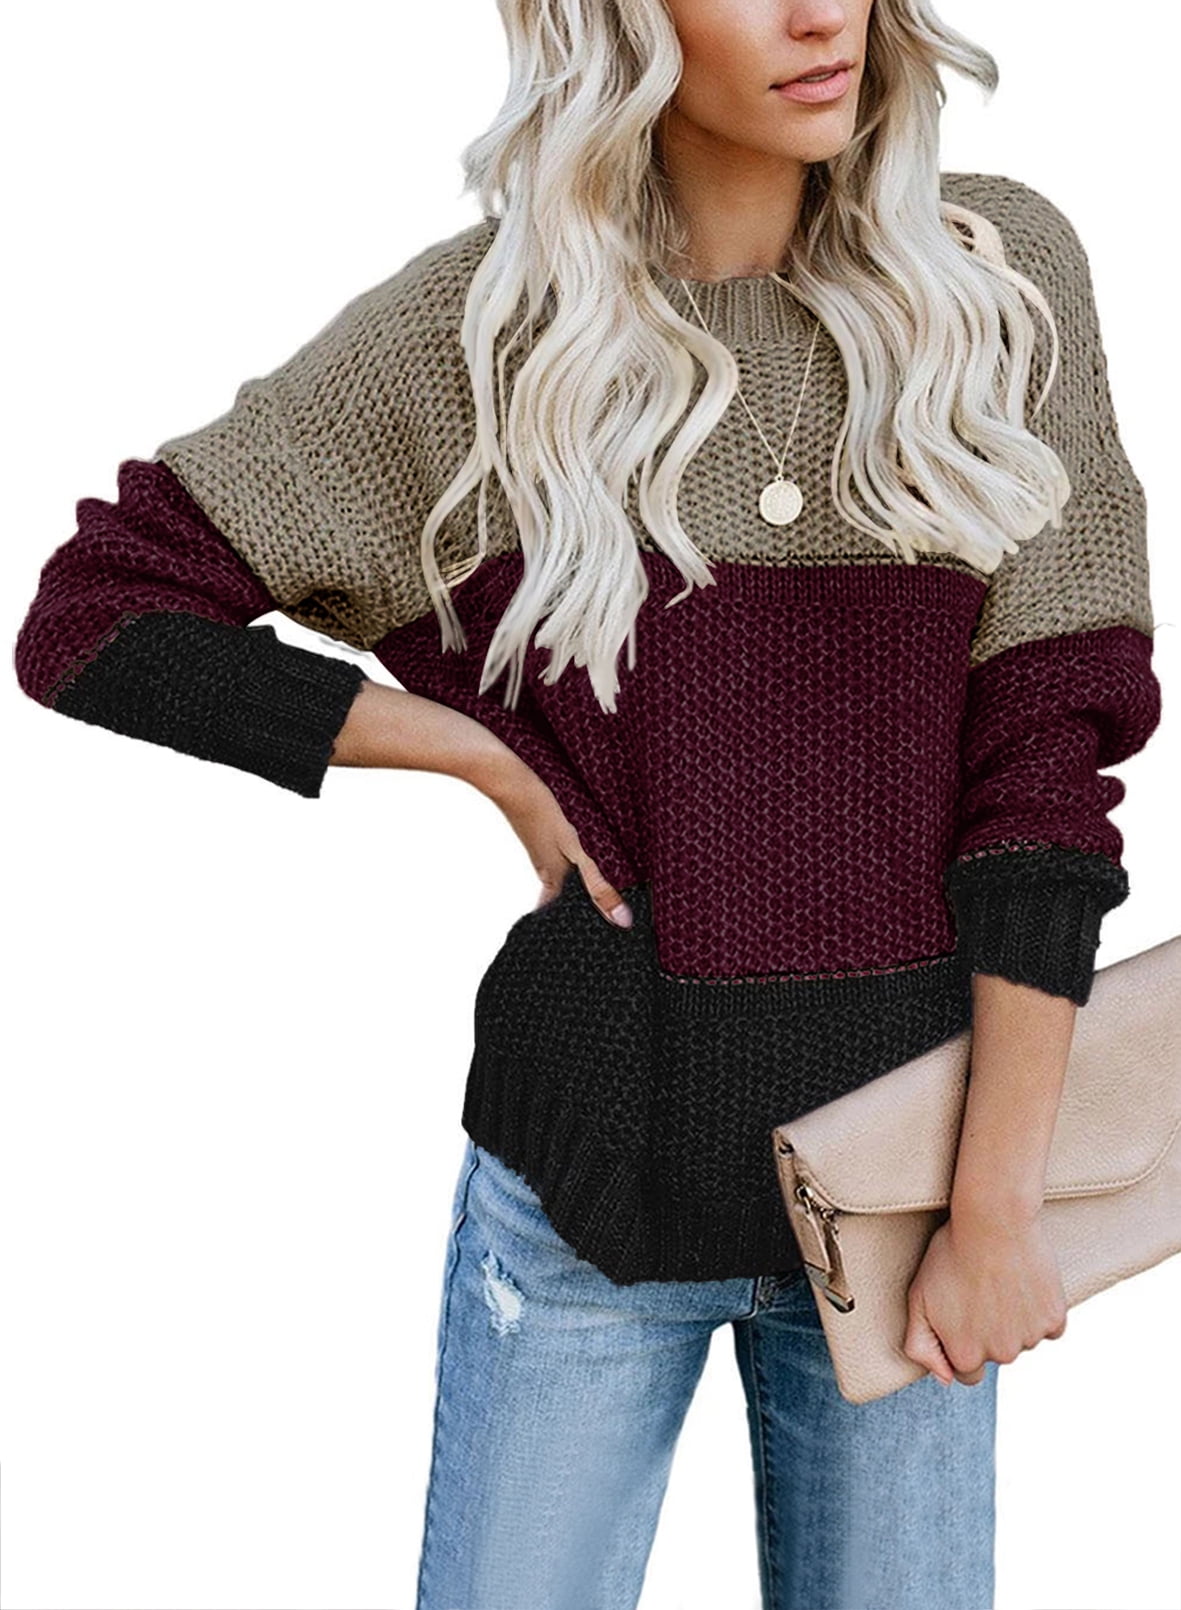 Asvivid Color Block Striped V Neck Sweater for Women Long Sleeve Knit Pullover Jumper Tops 